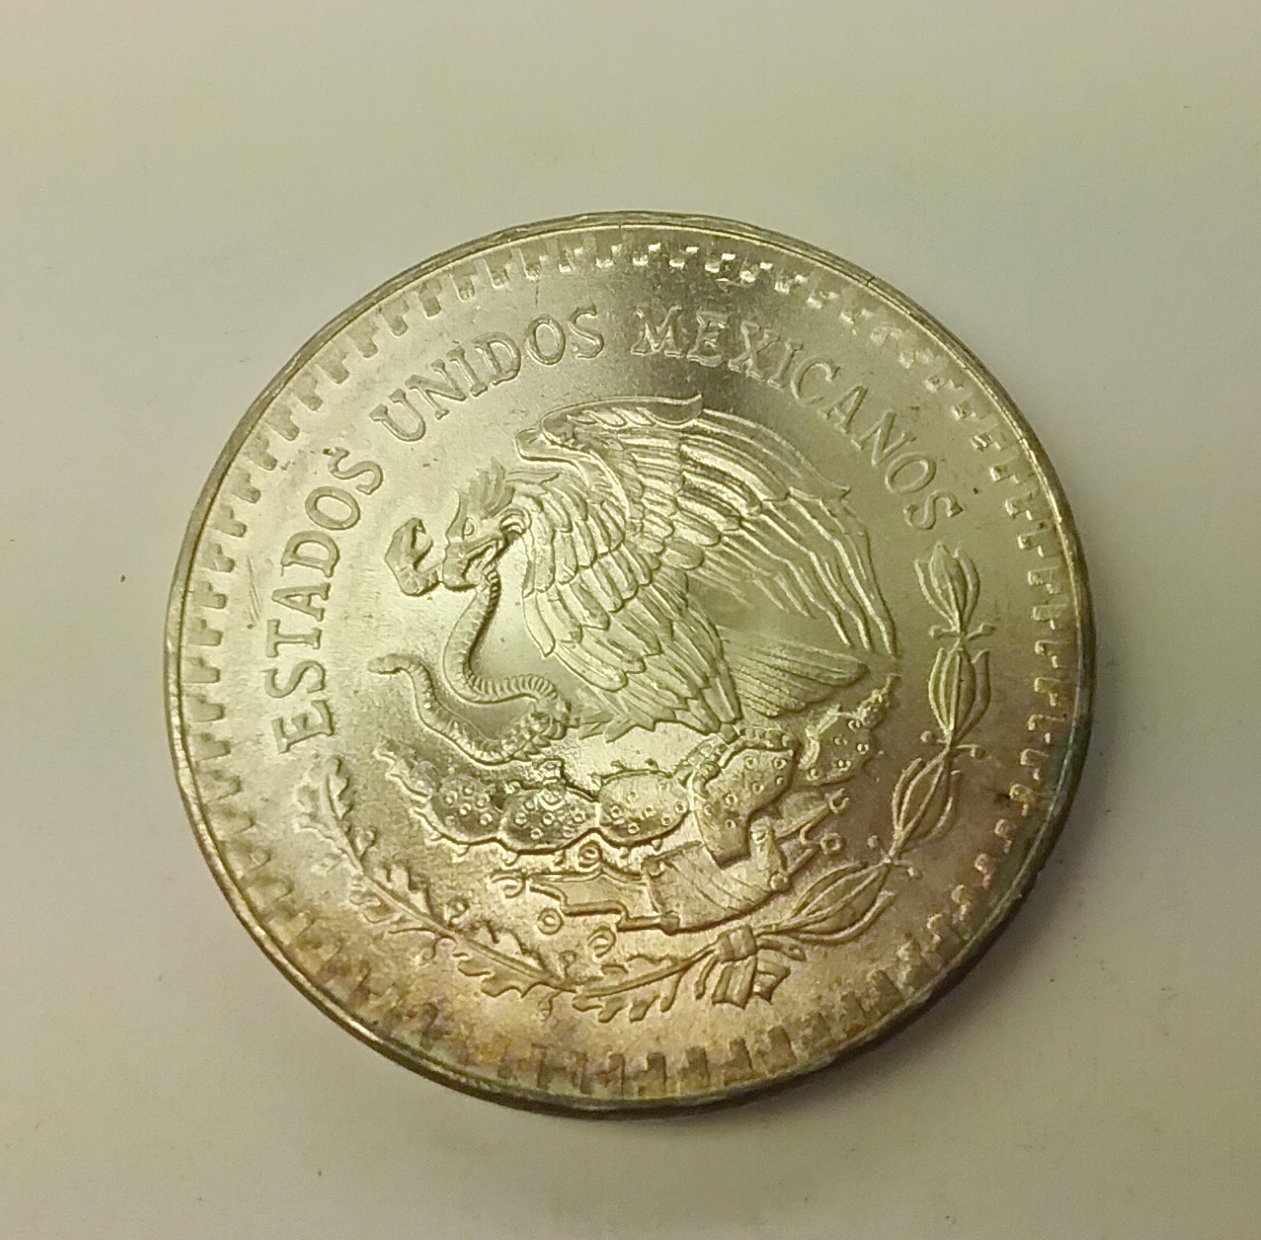 1985 Mexican Plata Pura silver coin